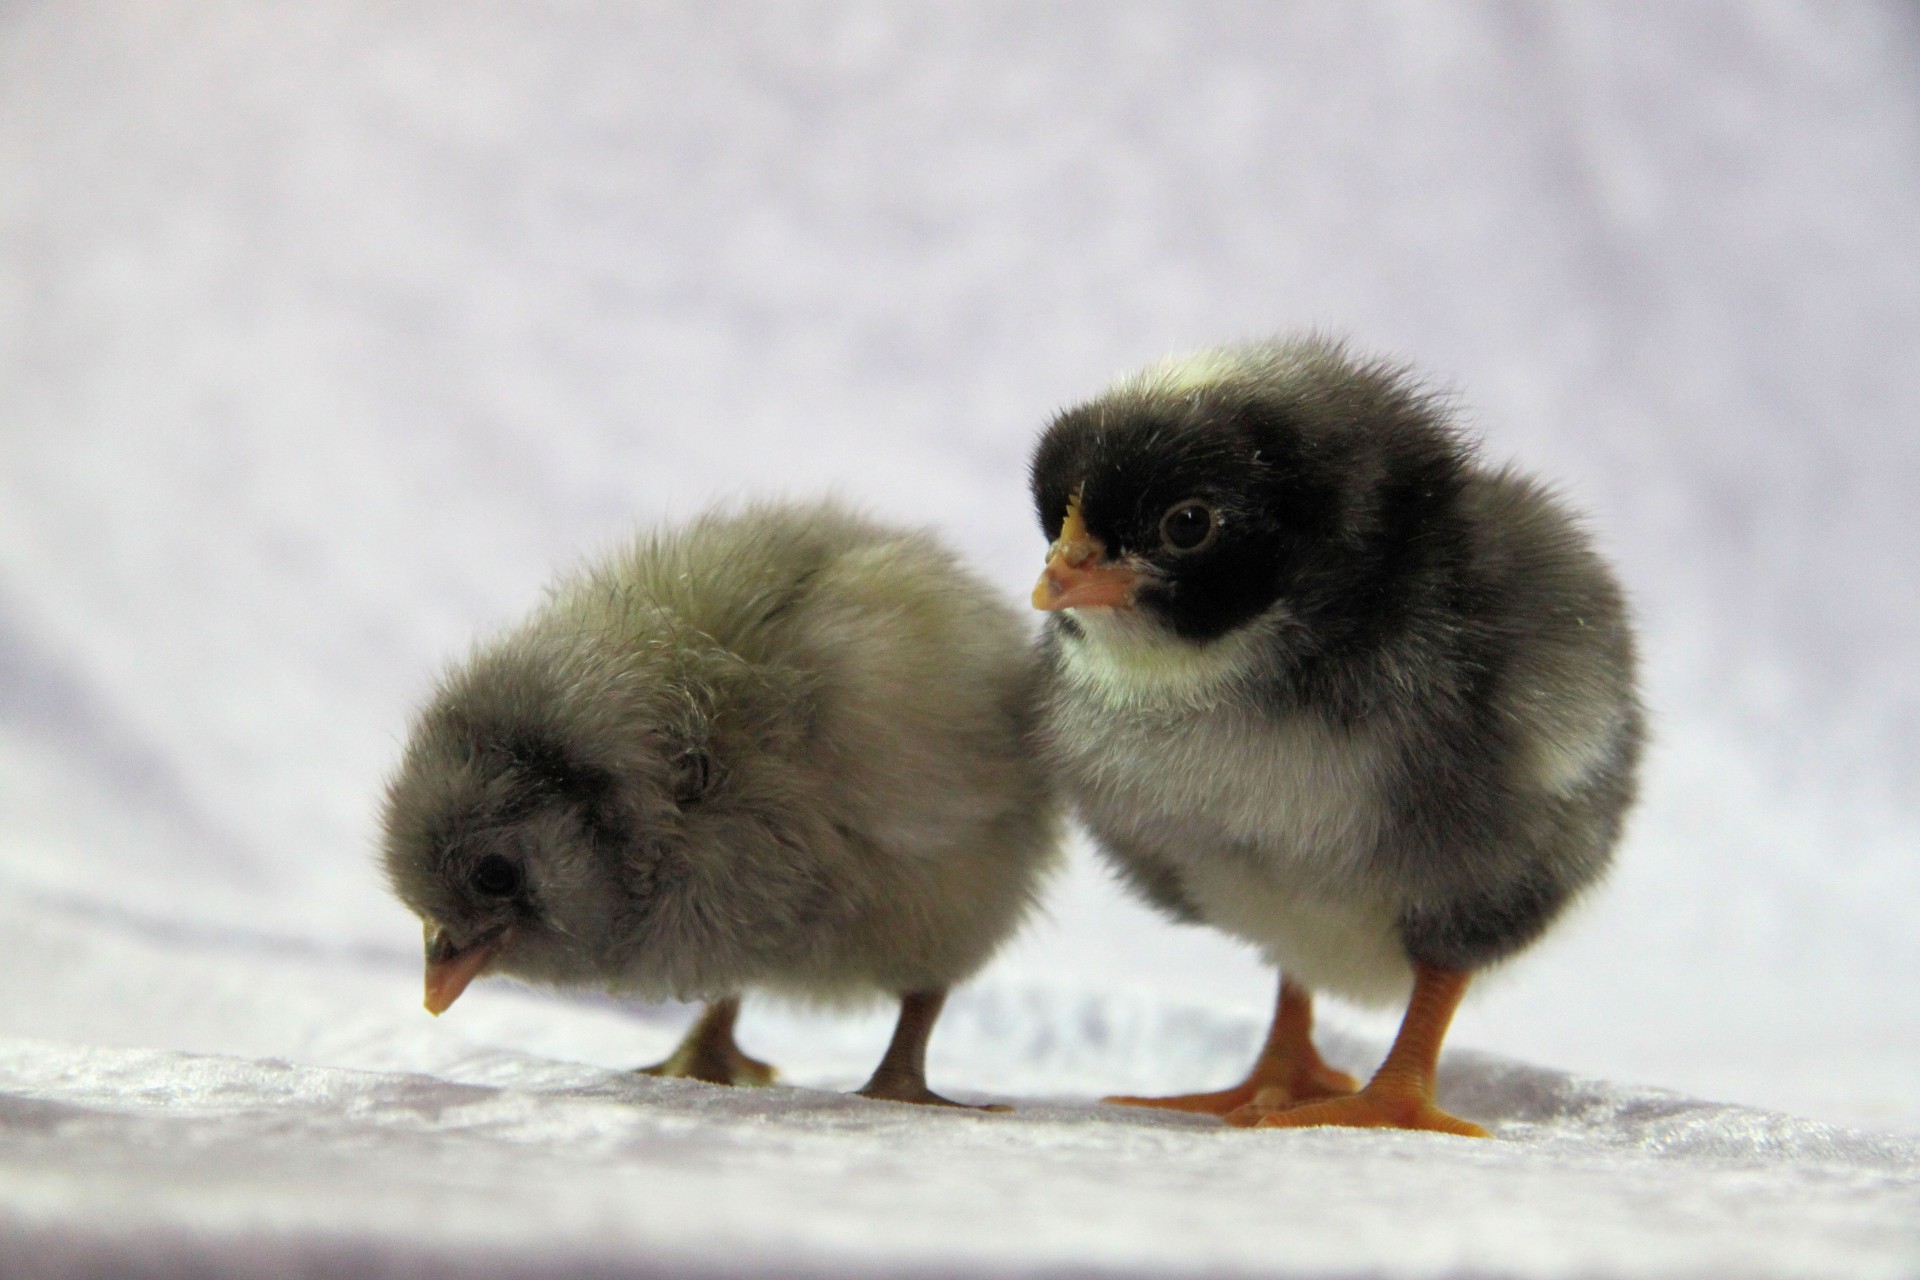 Cute Fluffy Chicks